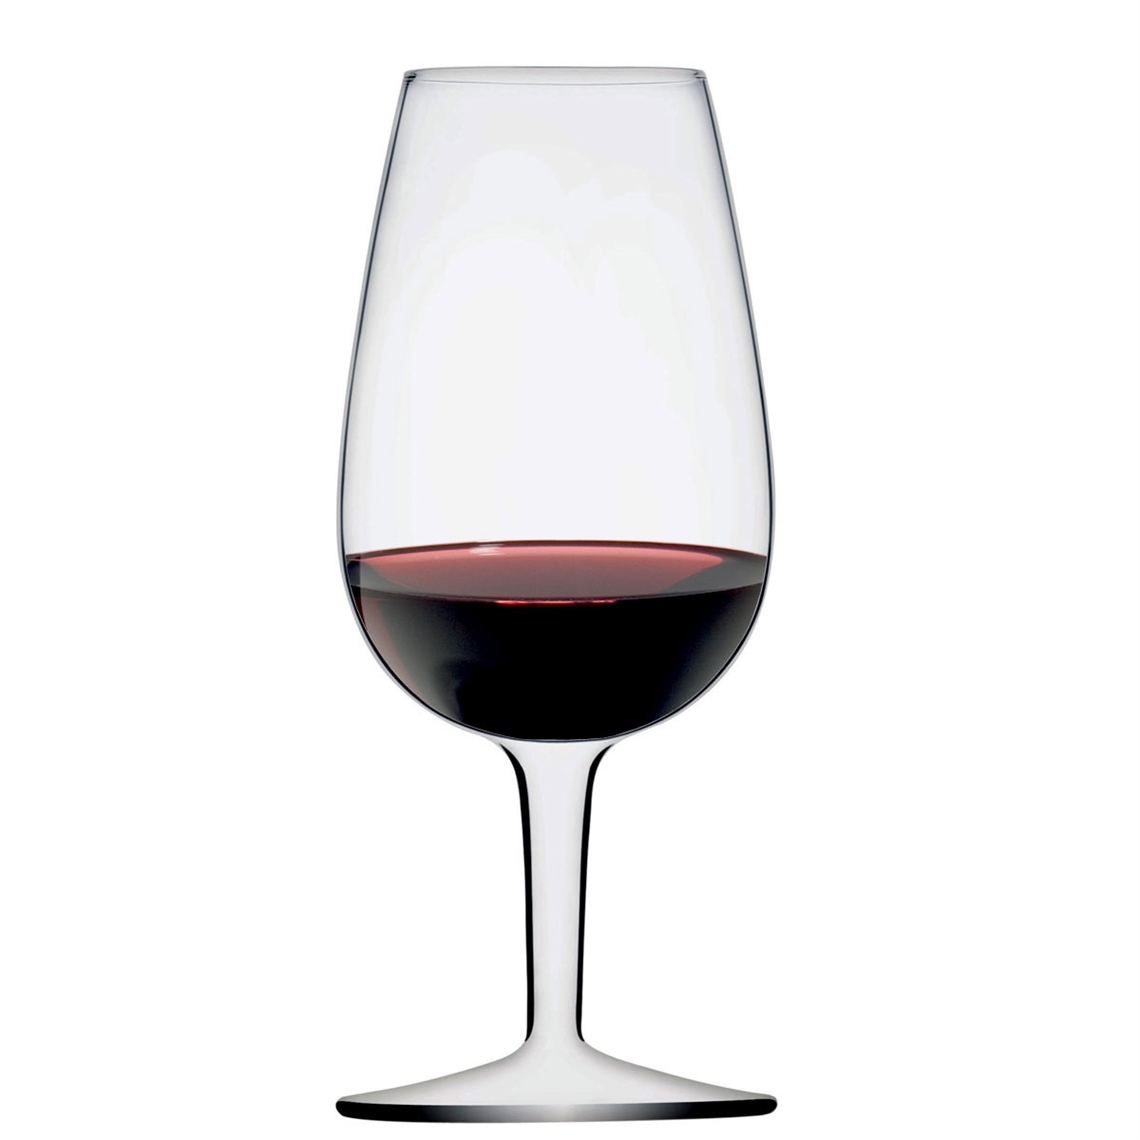 View more wine tasting glasses from our Wine Tasting Glasses range